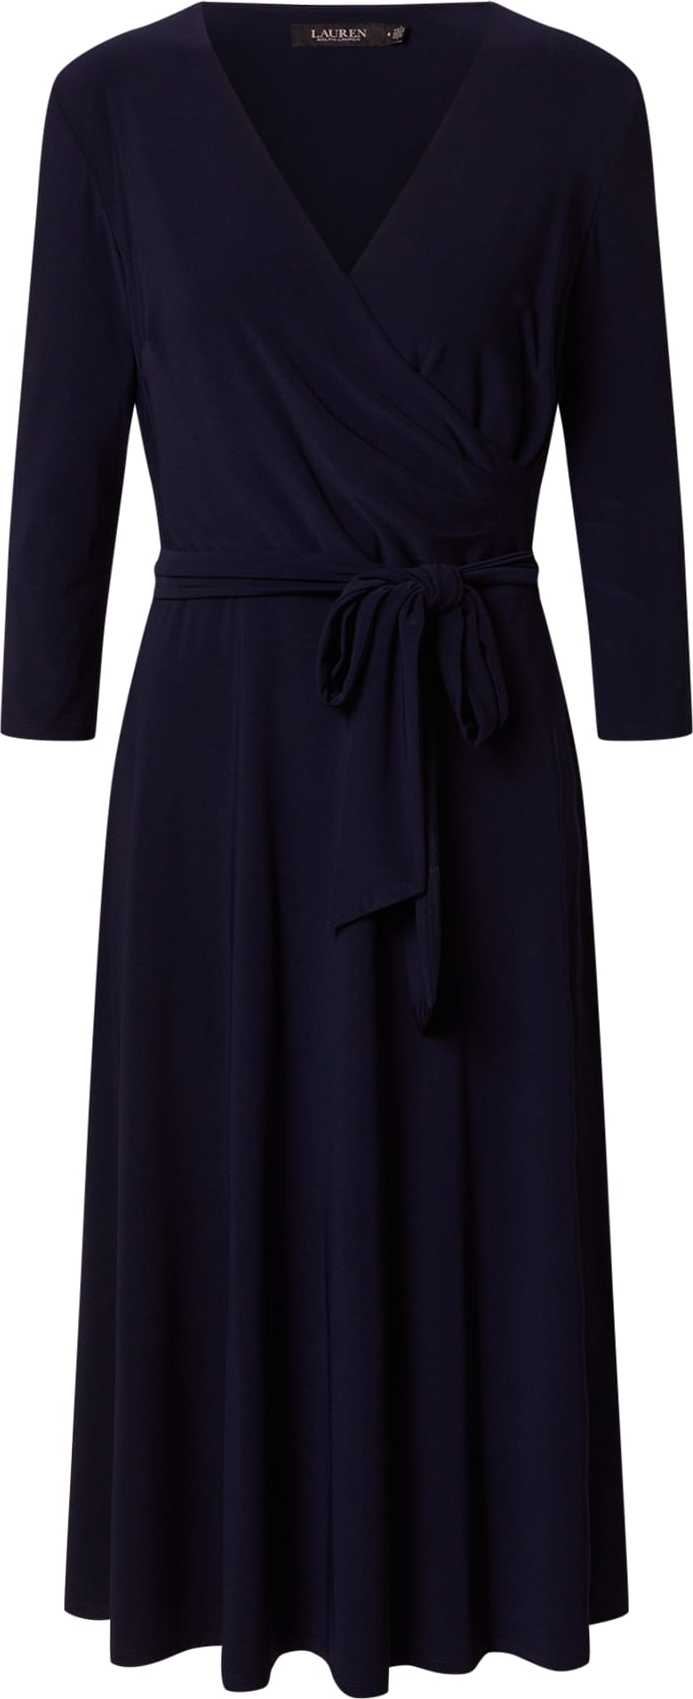 Šaty 'Carlyna' Lauren Ralph Lauren námořnická modř